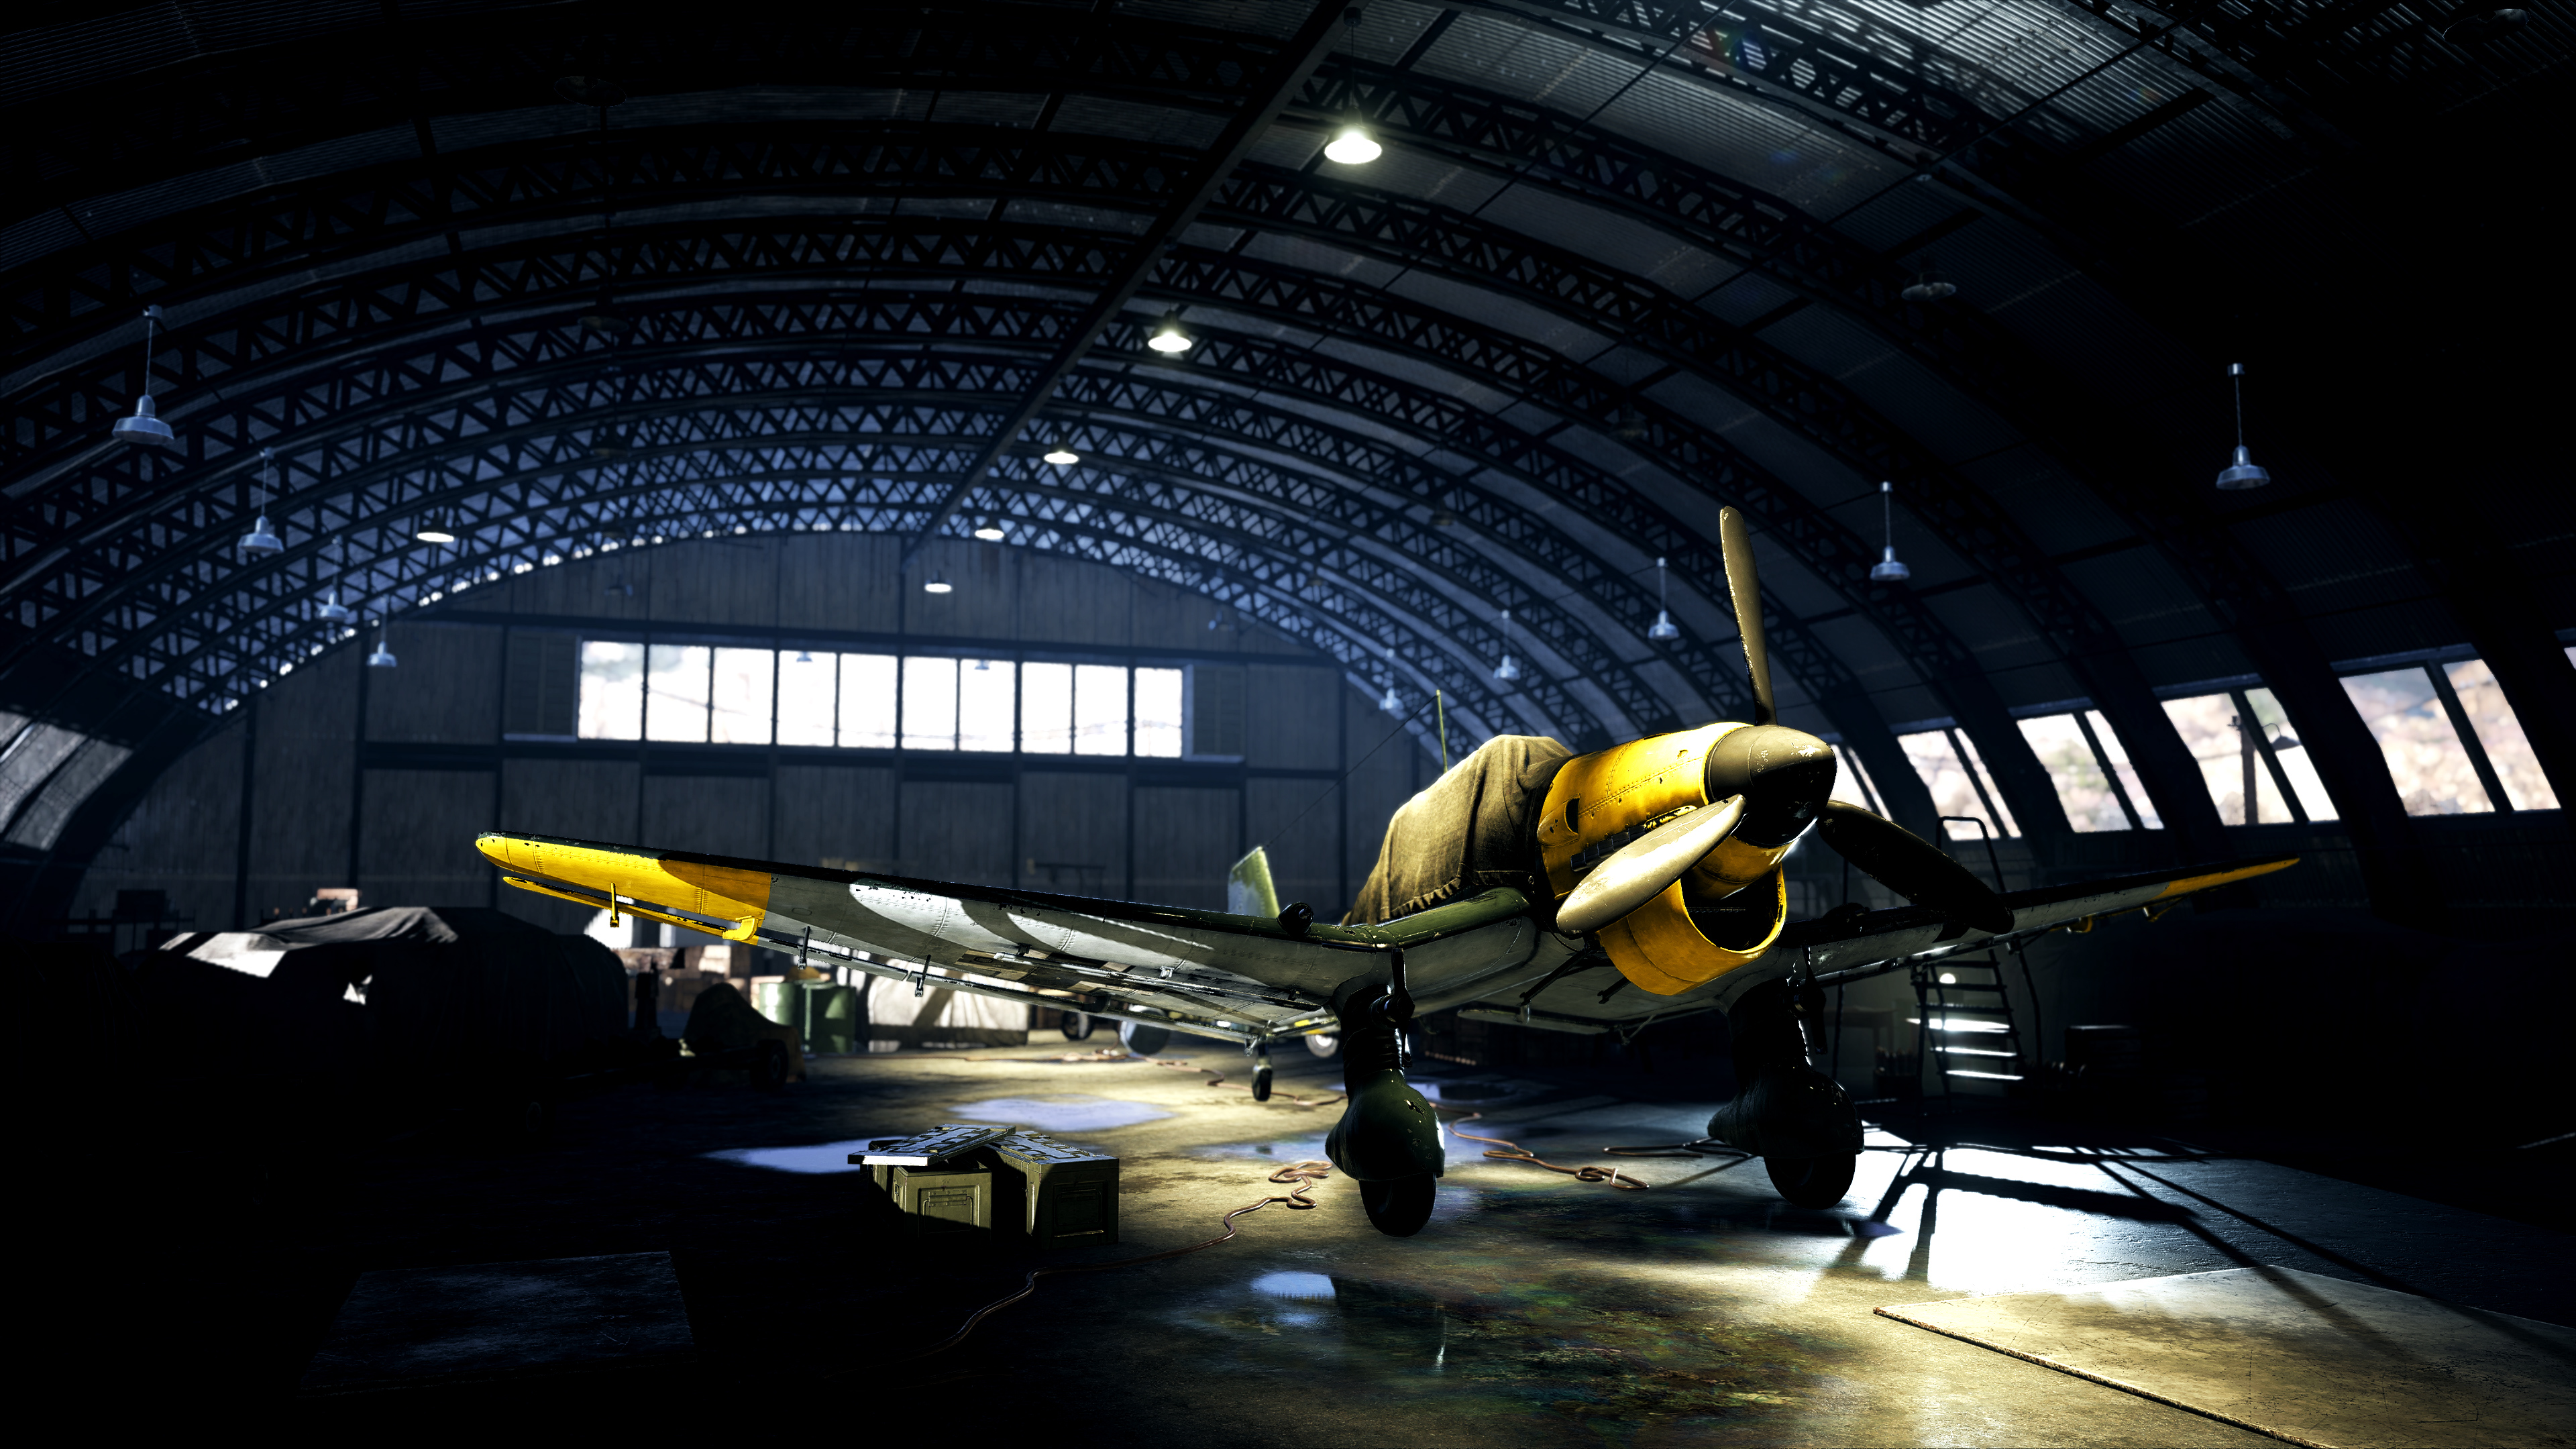 Wallpaper 4k Battlefield V Plane Hangar Games